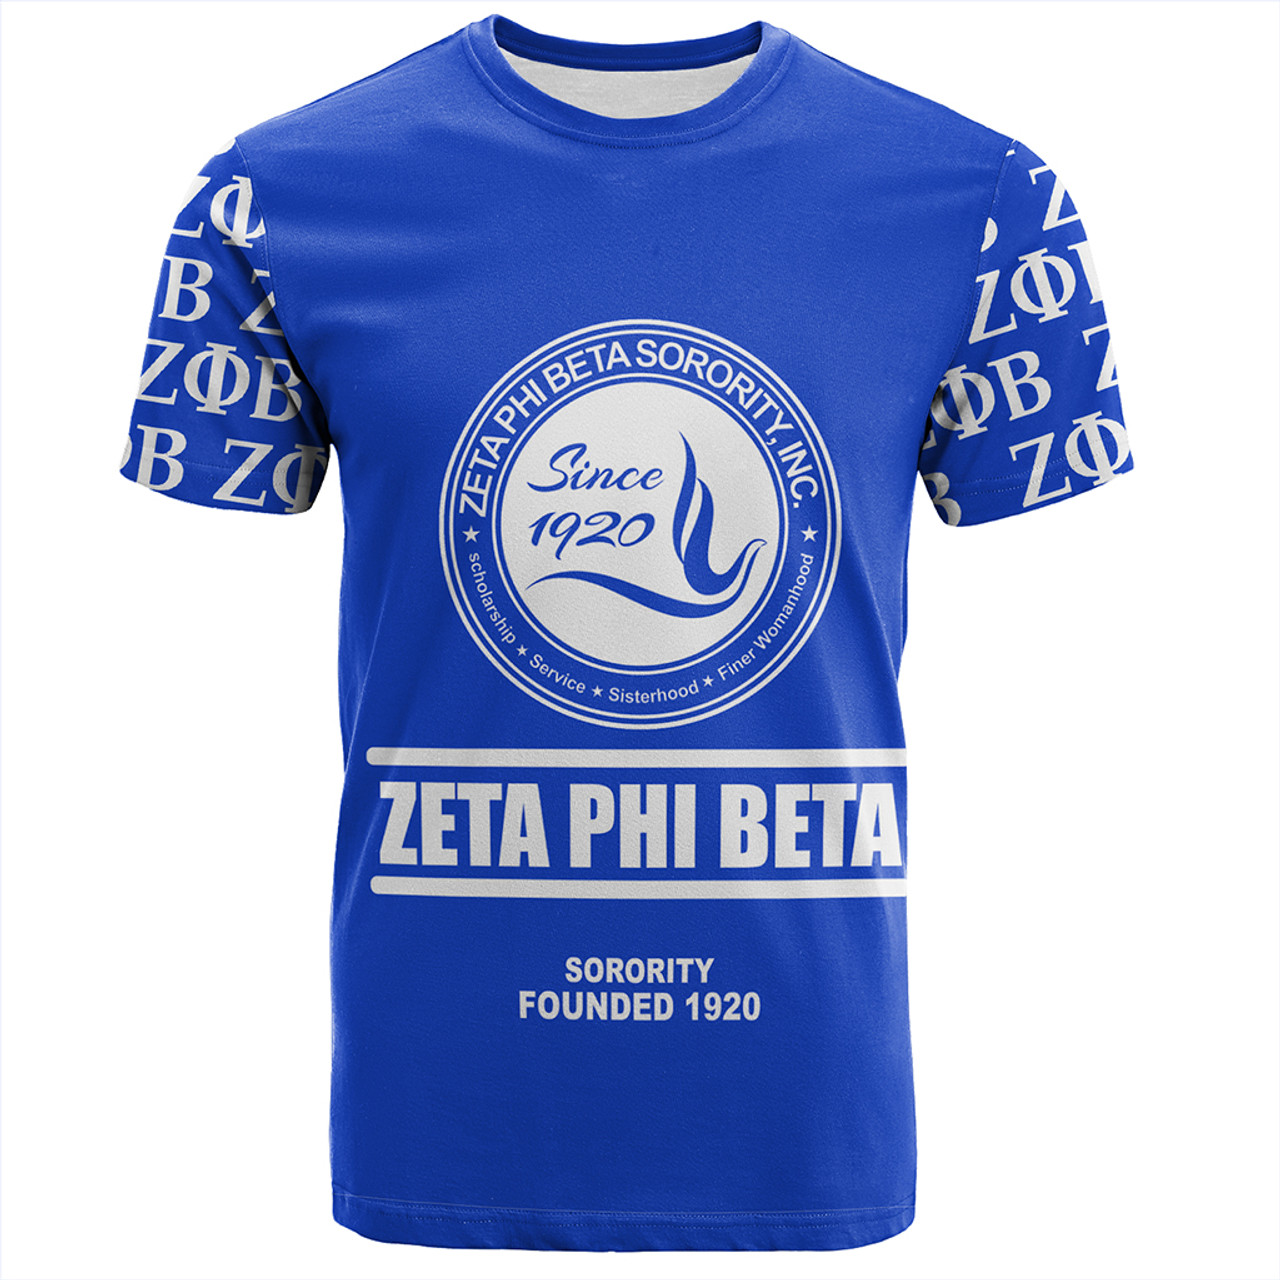 Zeta Phi Beta T-Shirt Since 1920